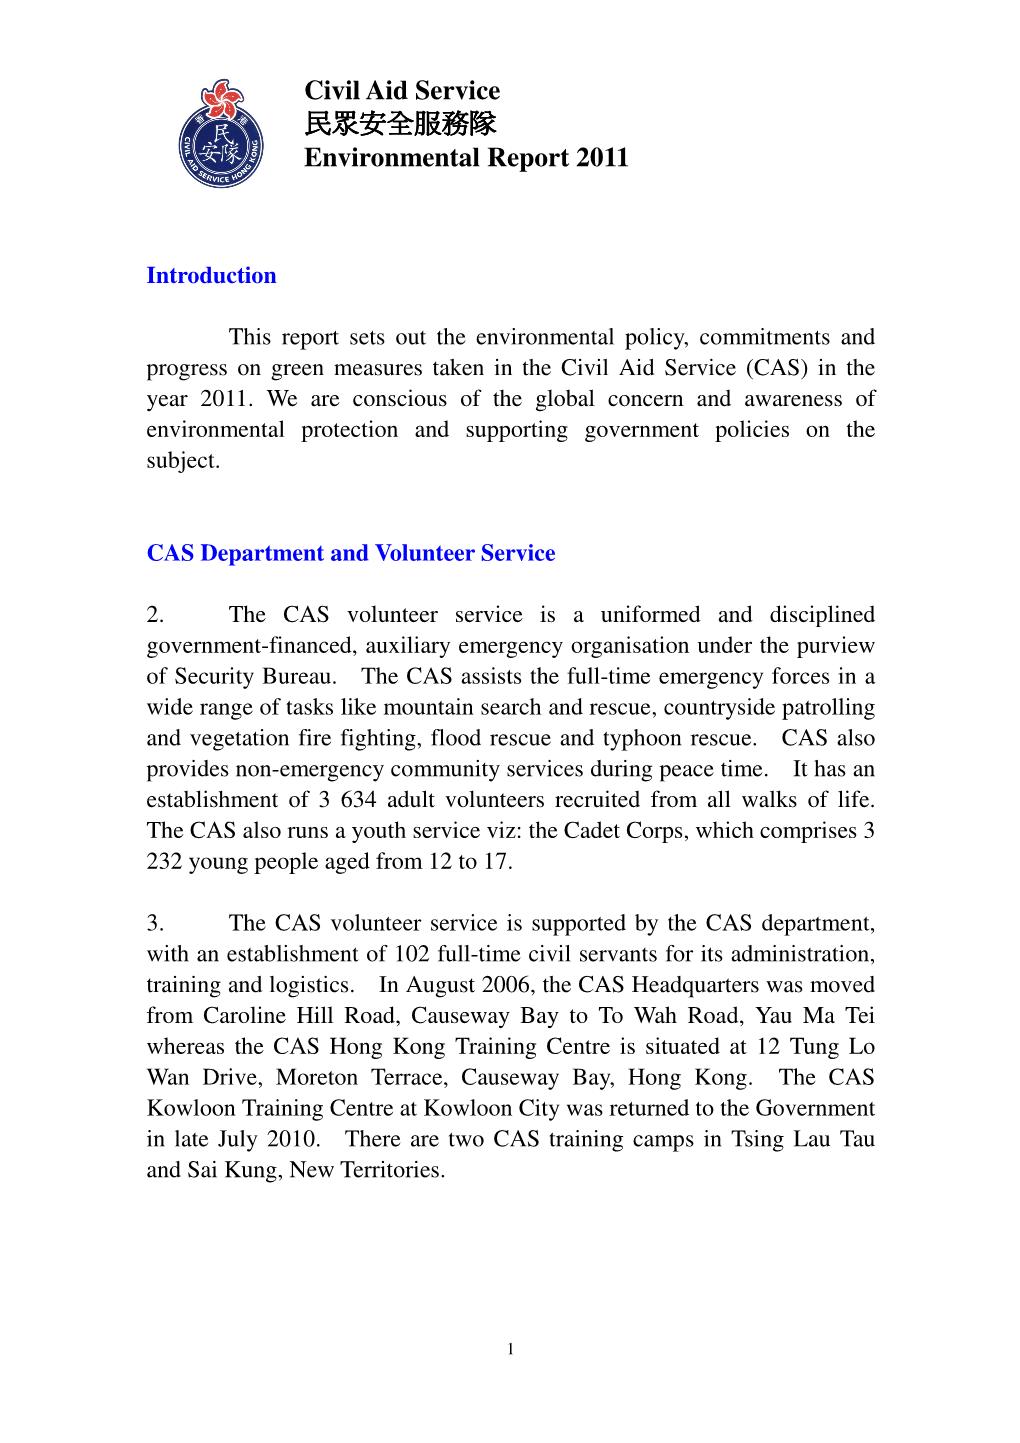 Civil Aid Service Environmental Report 2011